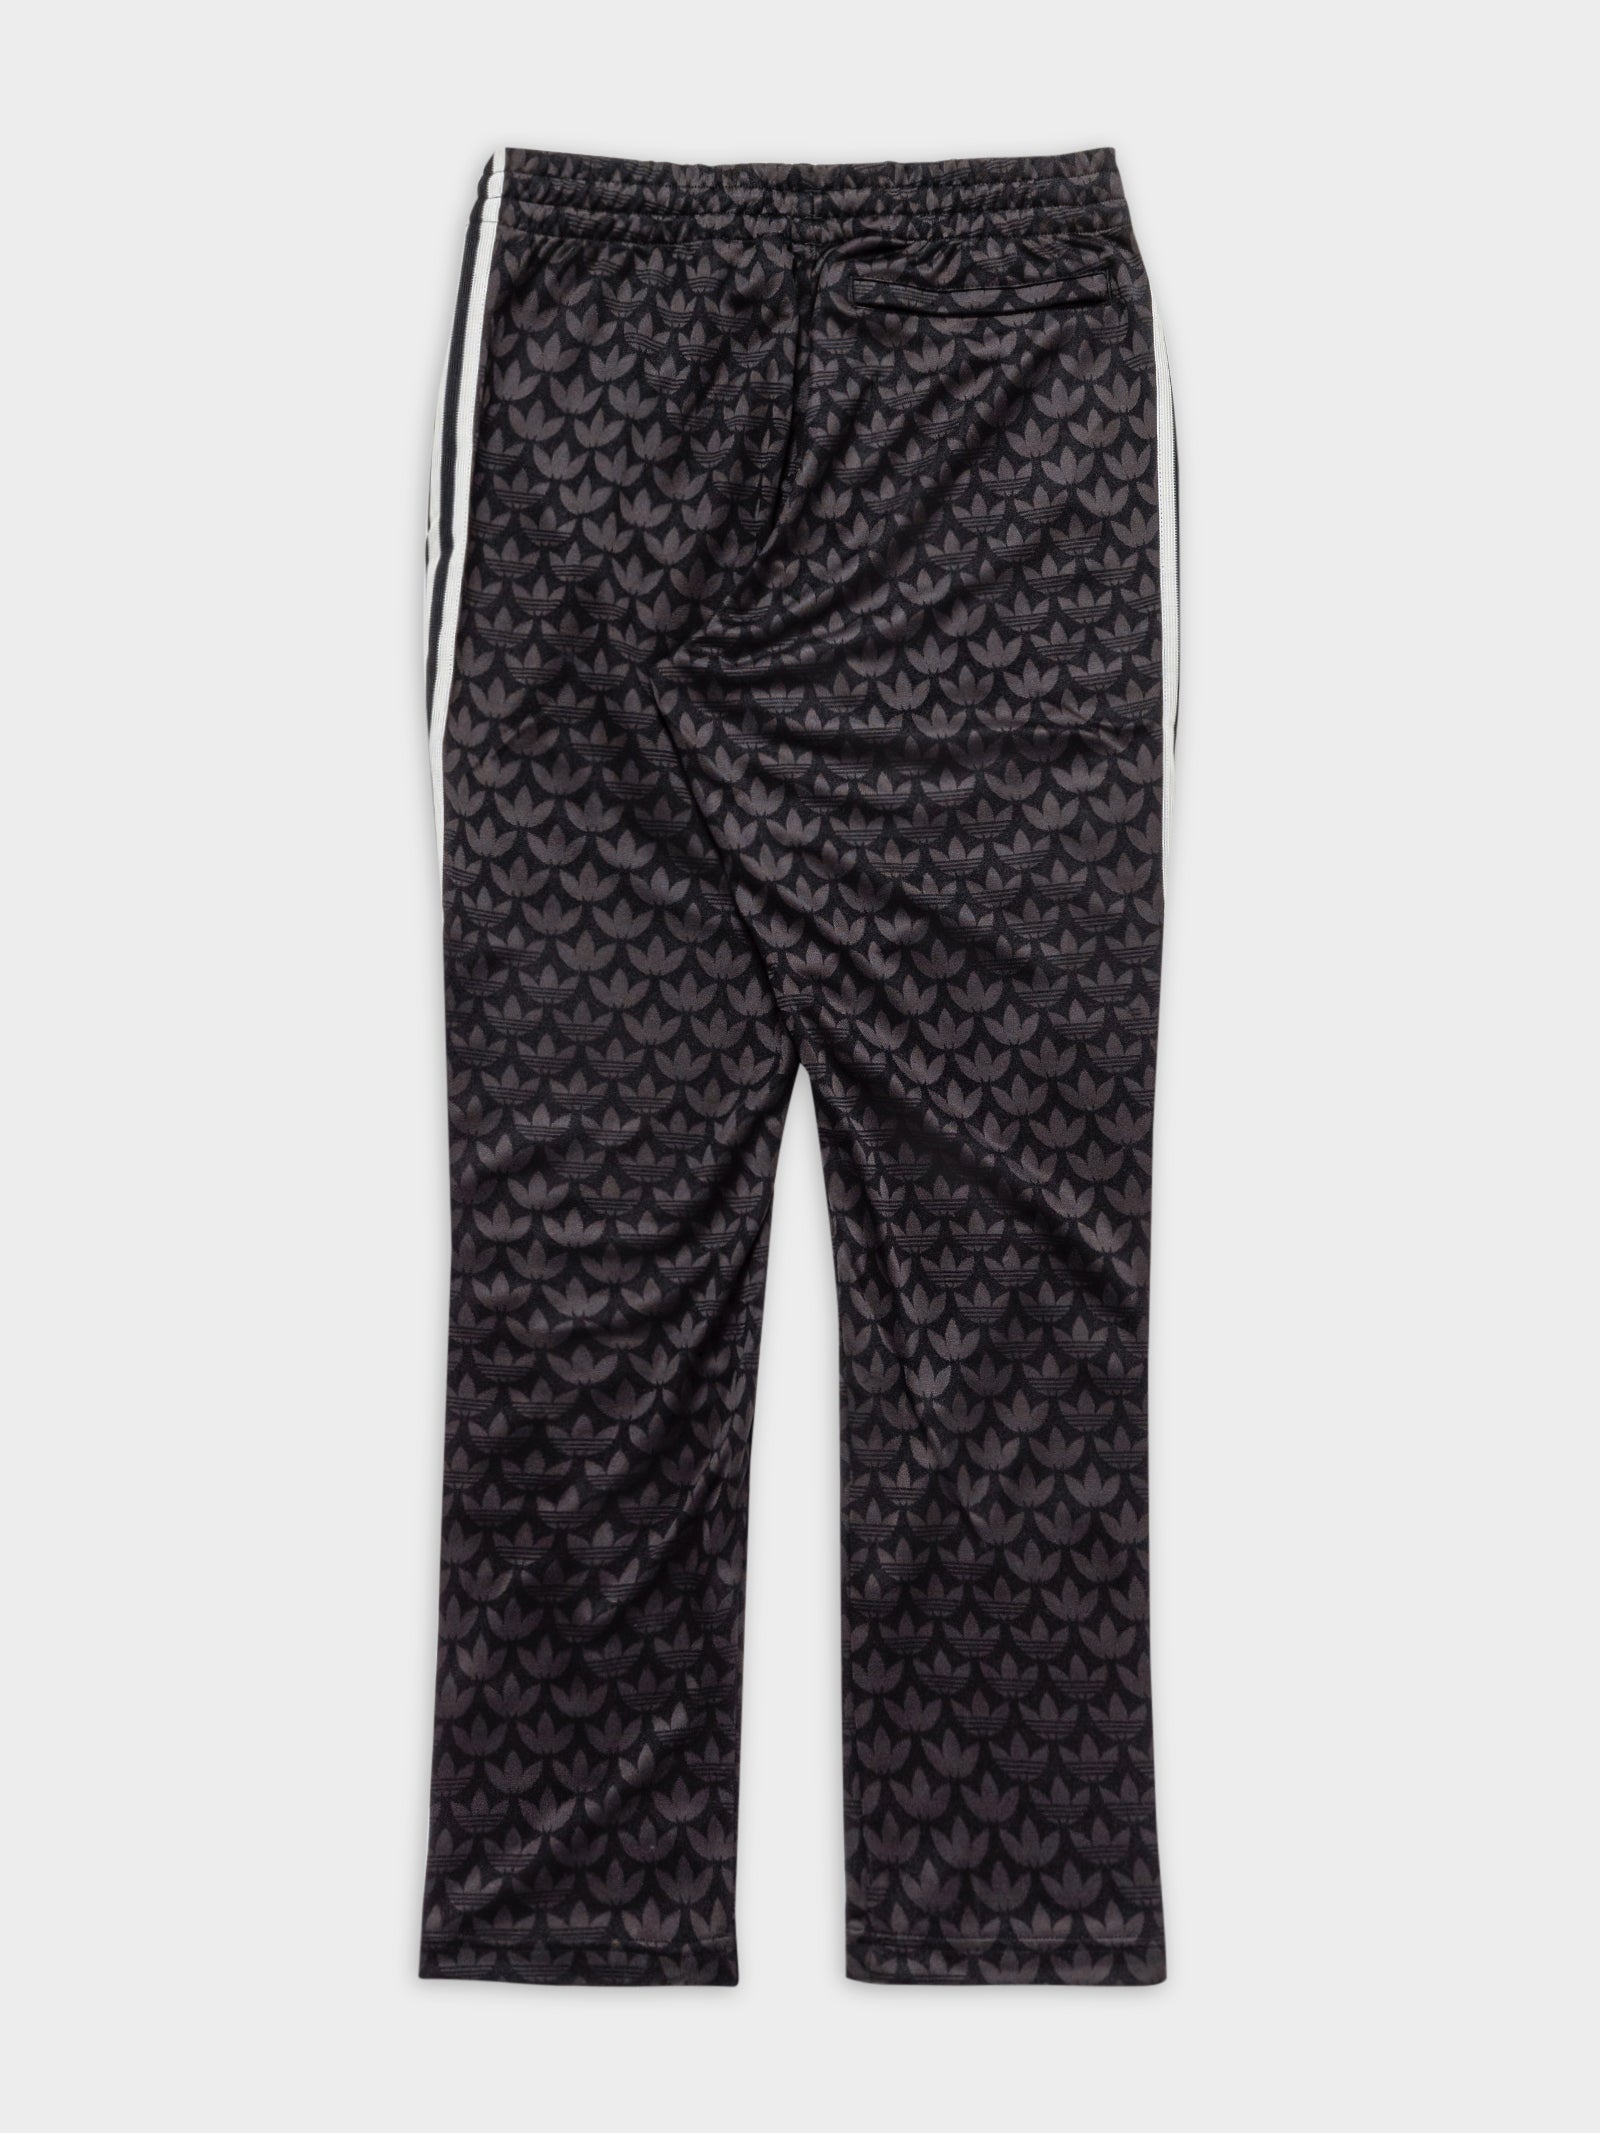 Louis Vuitton Stripe Accent Monogram Pajama Shirt, Brown, 36